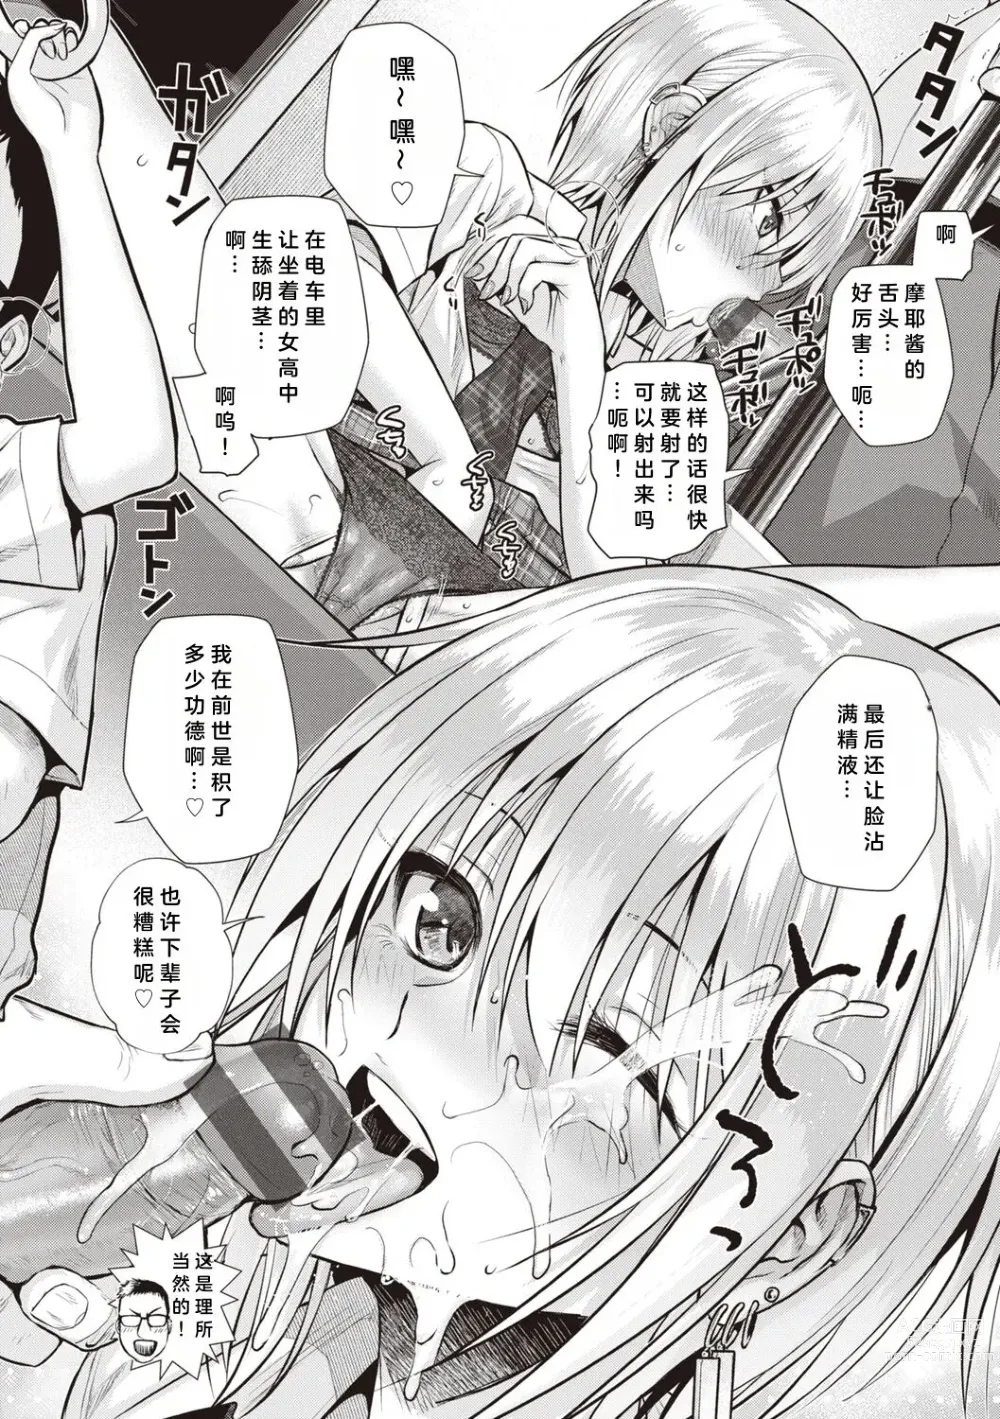 Page 5 of manga Prototype Teens